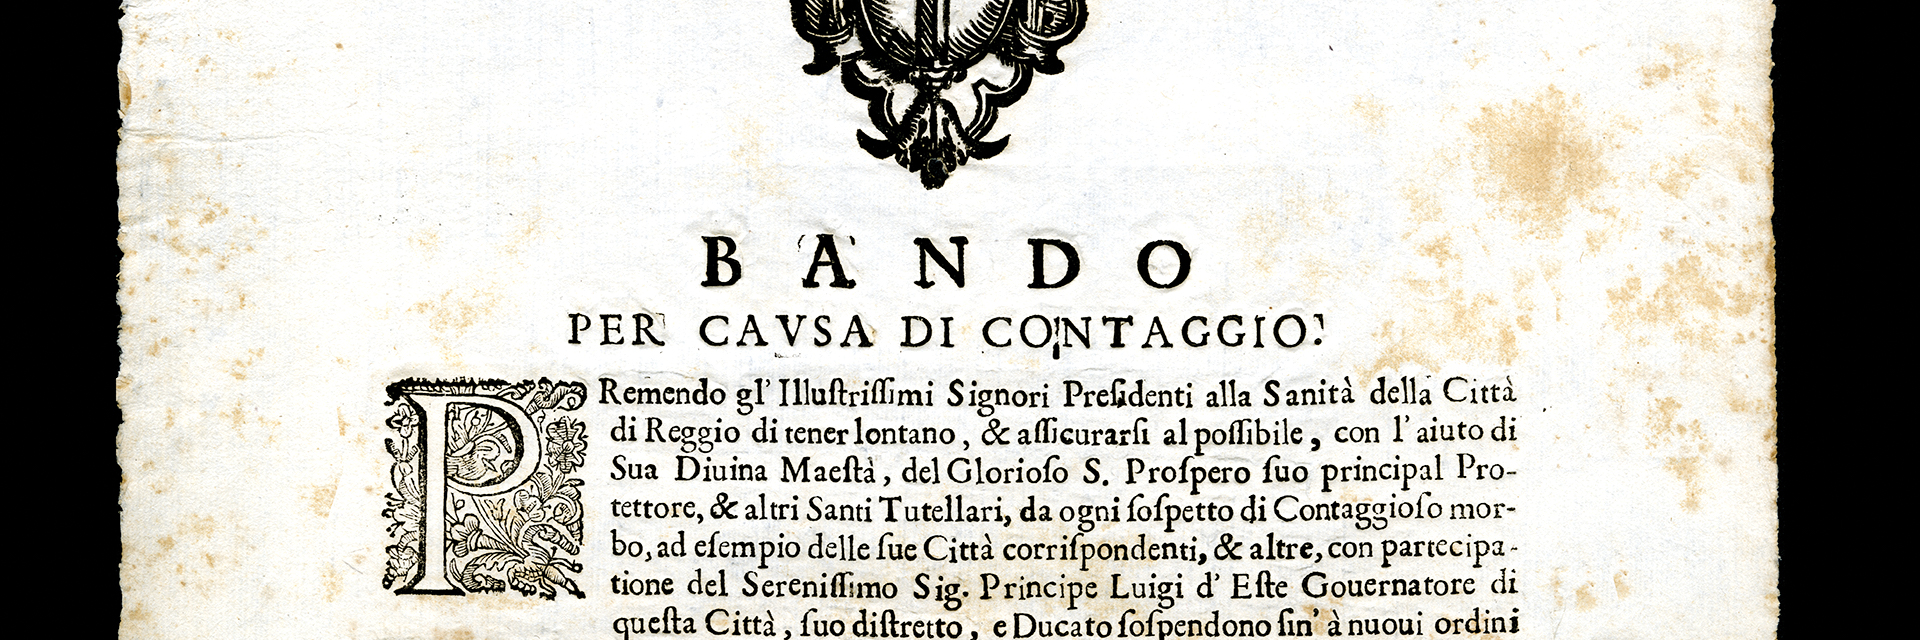 detail from 17th century quarantine broadside from Malta